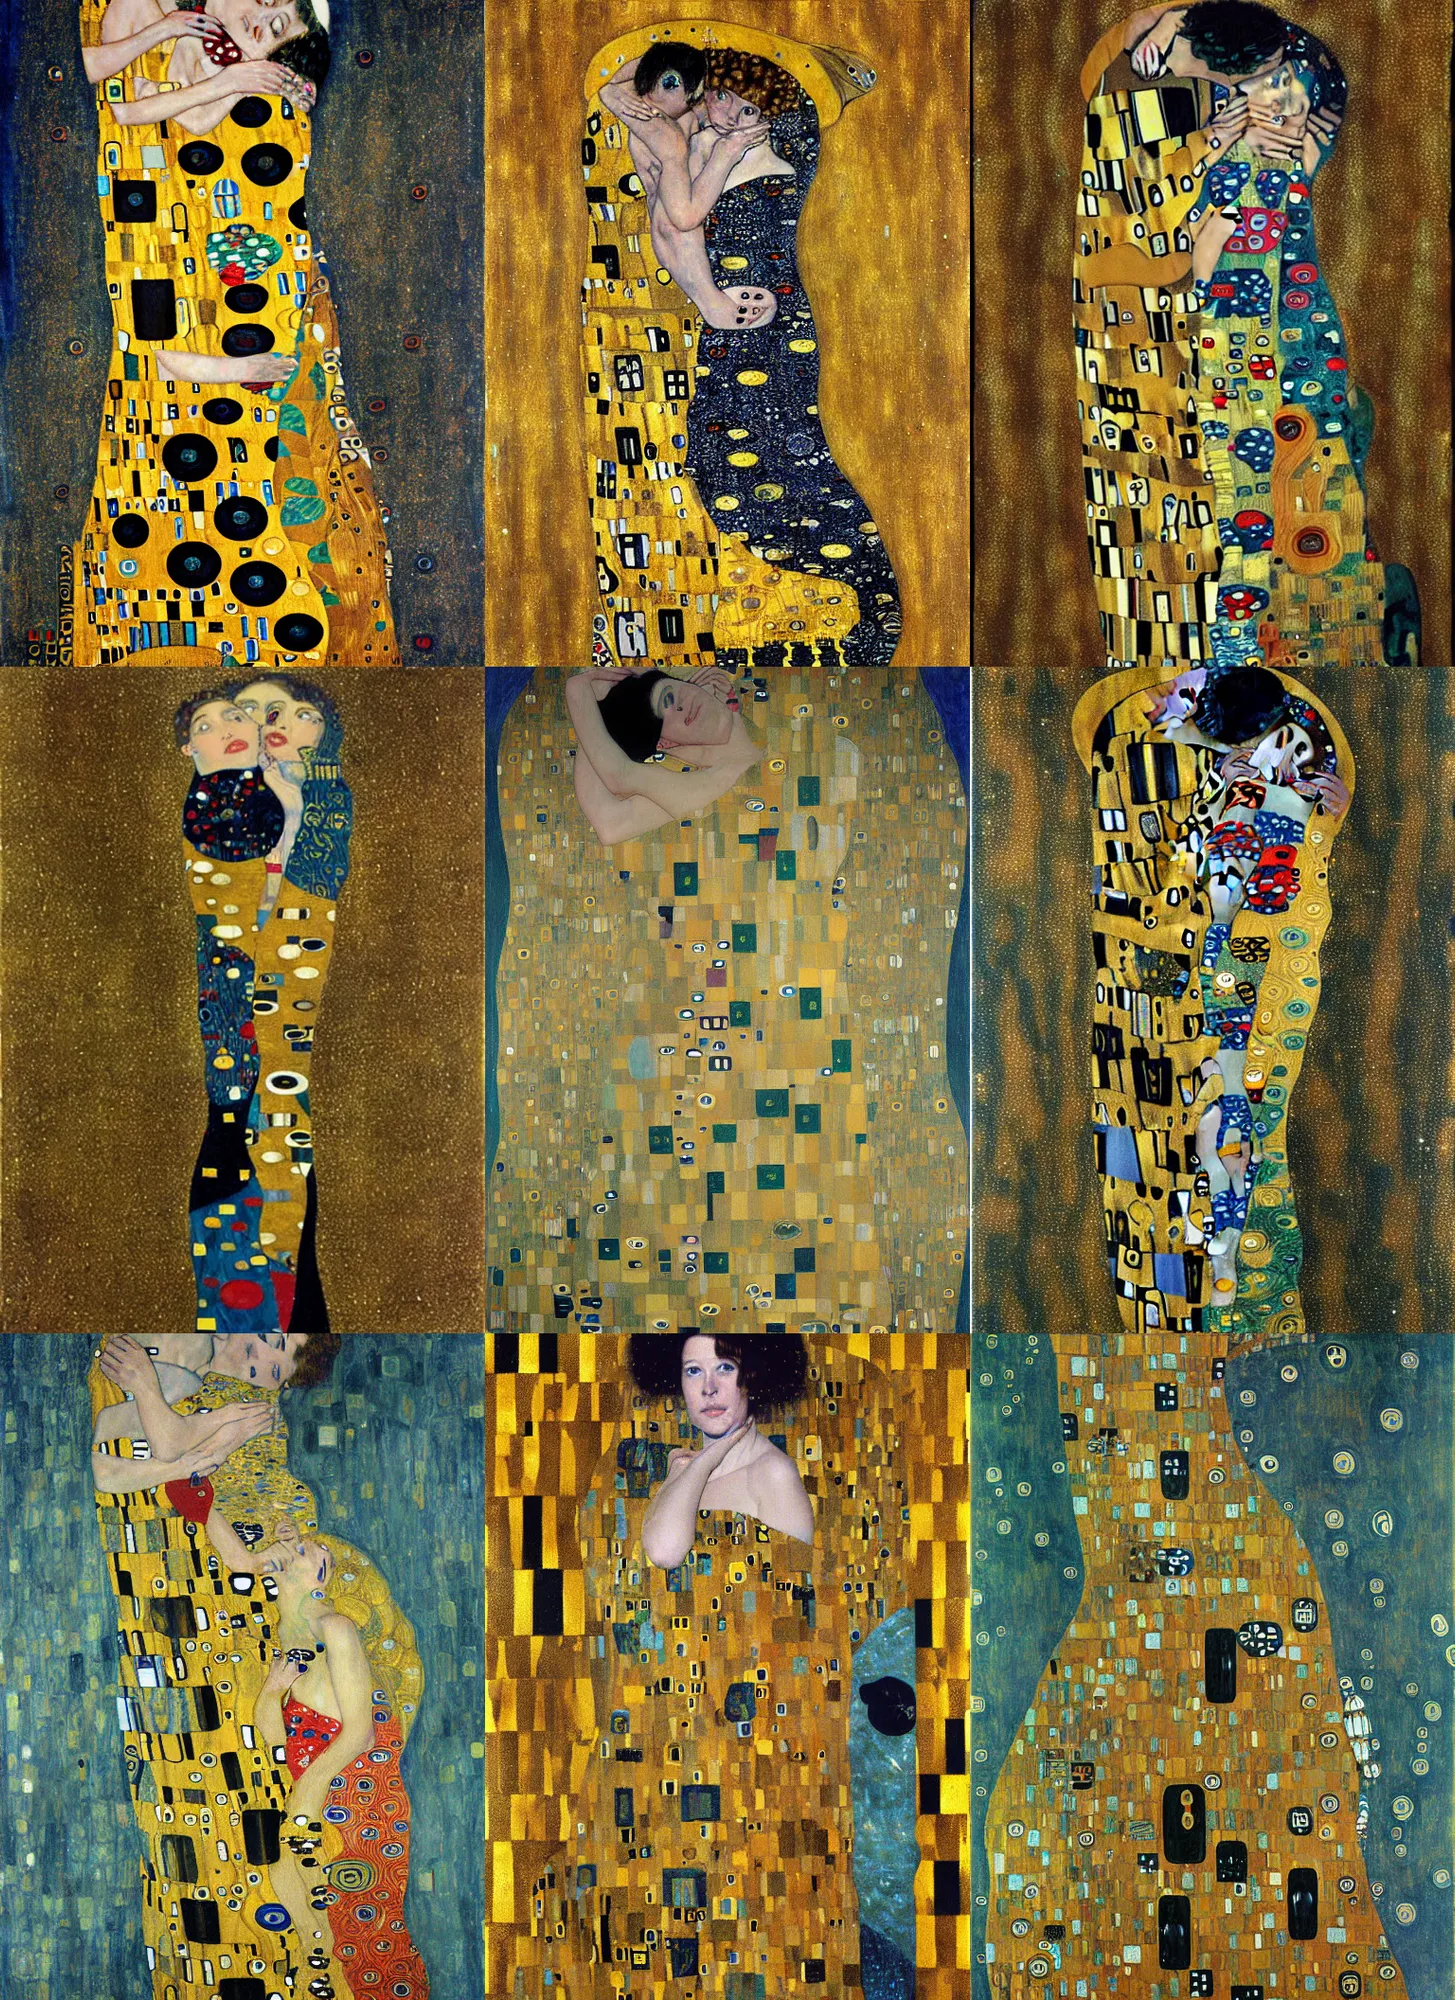 Prompt: A sharknado, painted by Gustav Klimt